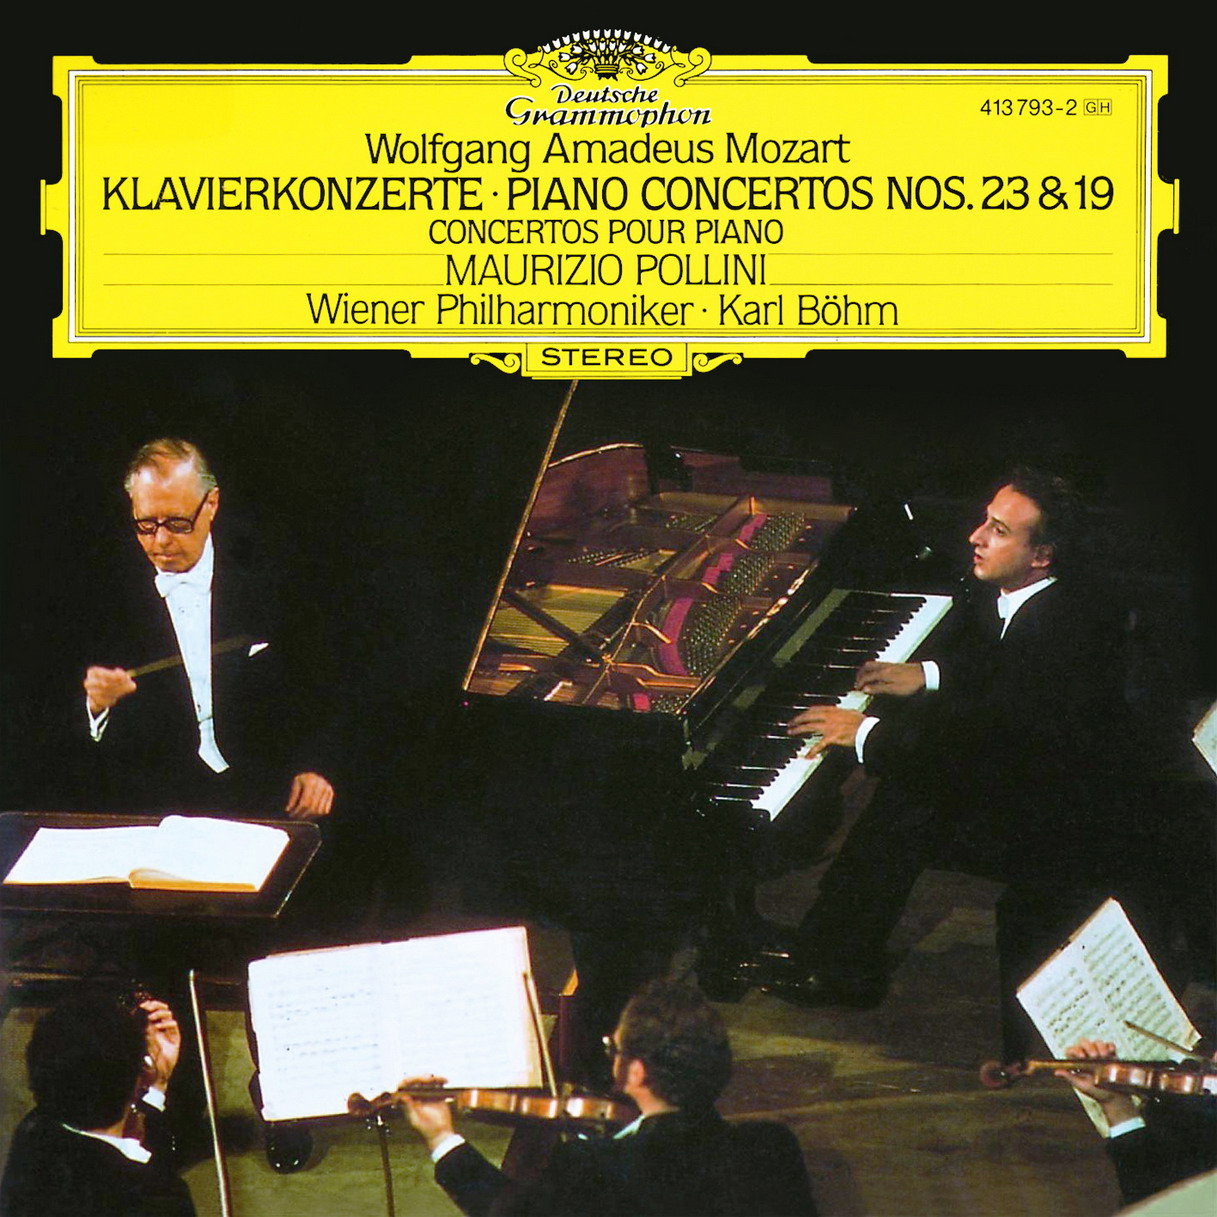 Wolfgang Amadeus Mozart - Piano Concertos 23 & 19 - Maurizio Pollini, Karl Bohm & Wiener Philharmoniker (1976/2012) [e-Onkyo FLAC 24bit/192kHz]